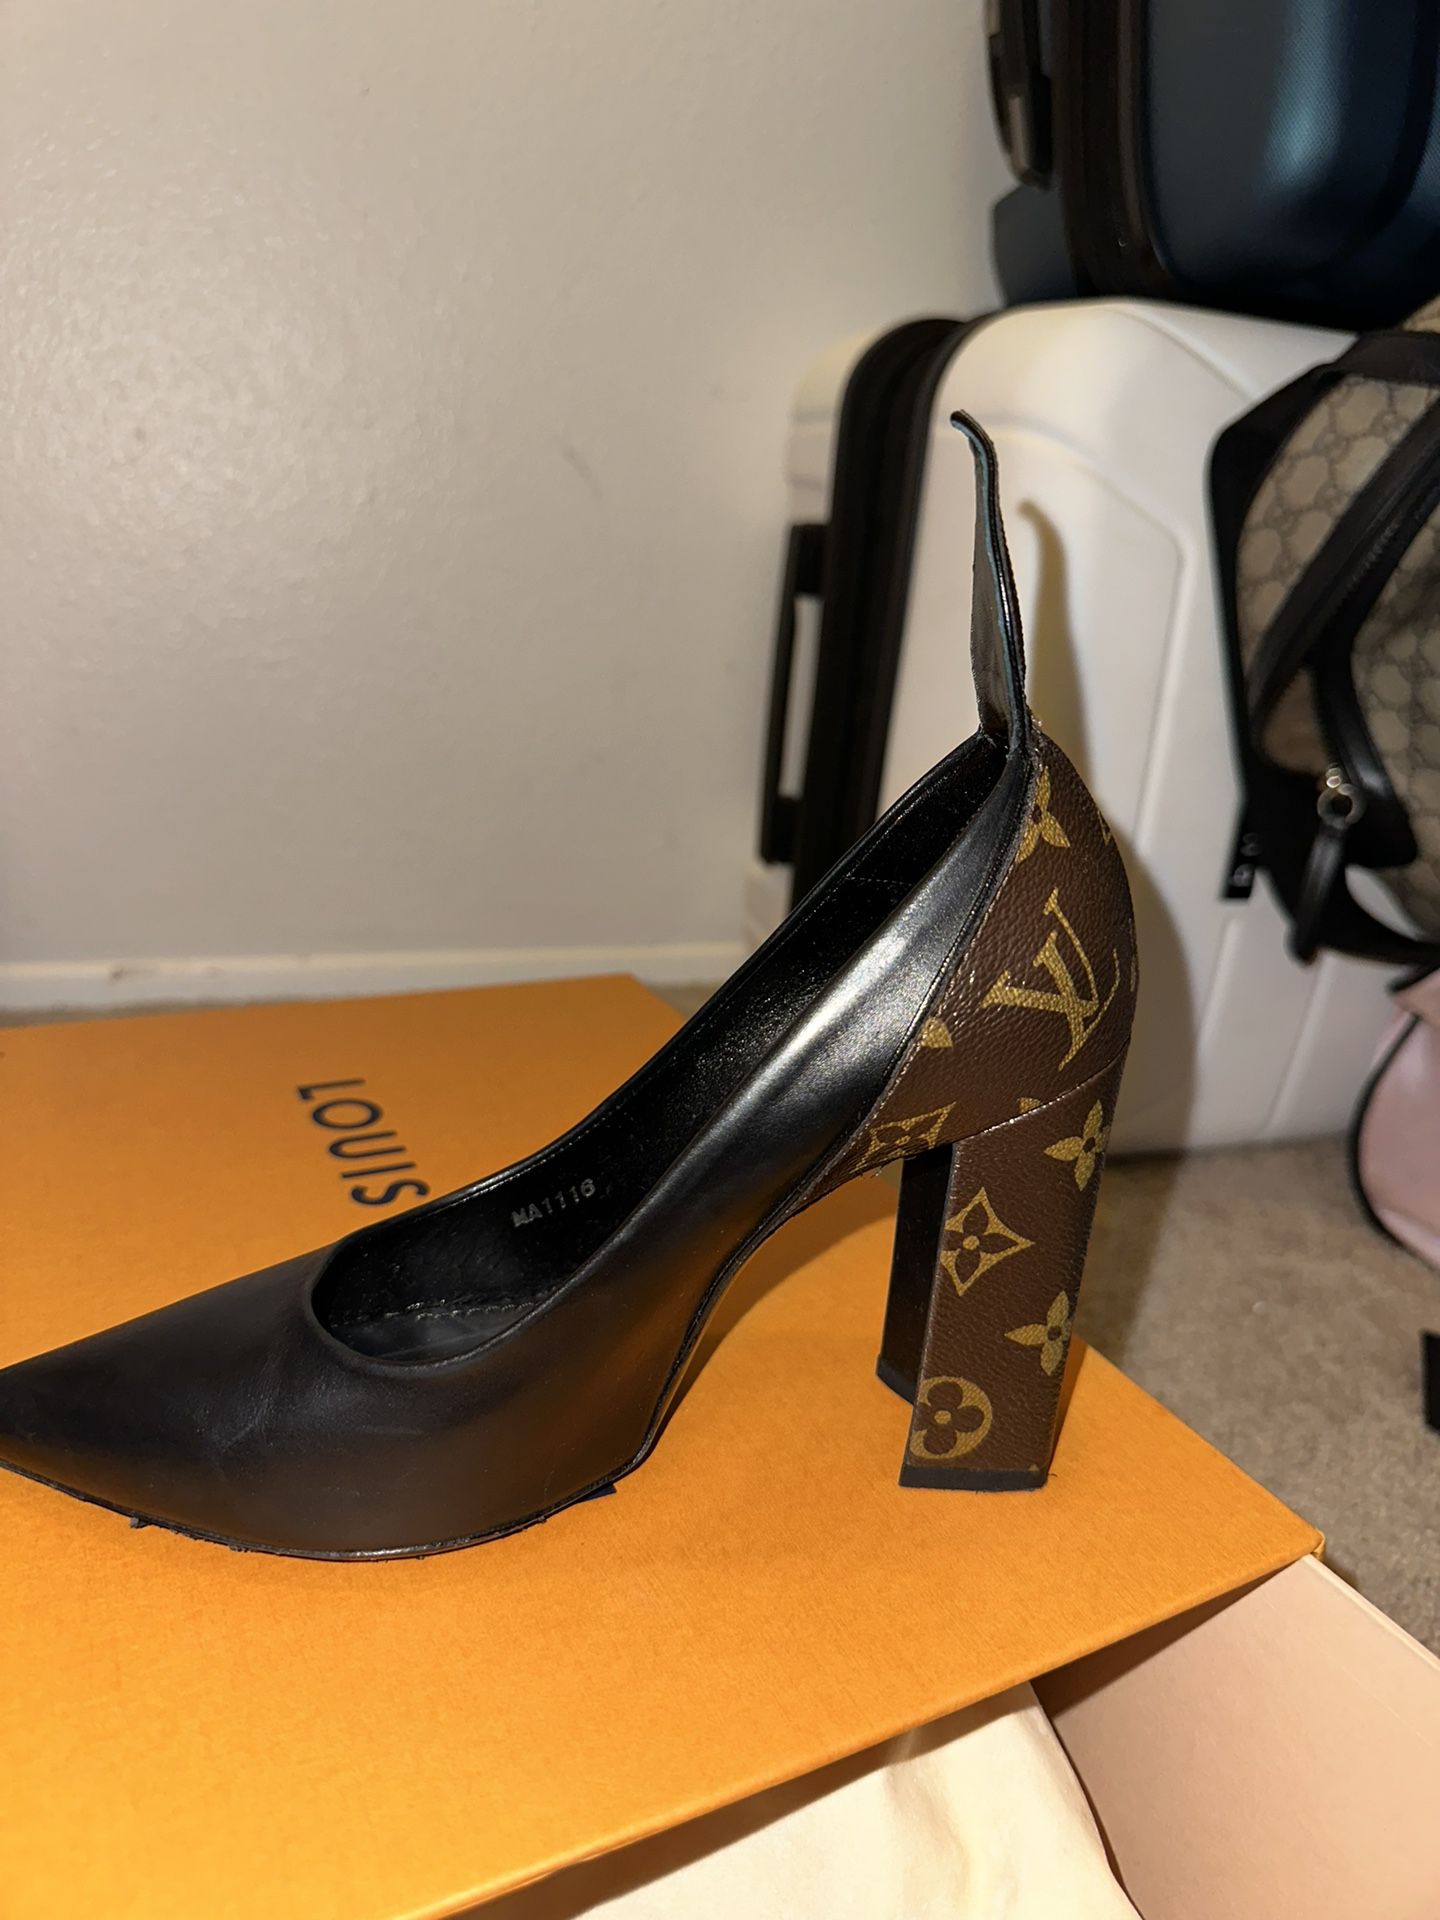 LV high heels Size 6 for Sale in Bellevue, WA - OfferUp